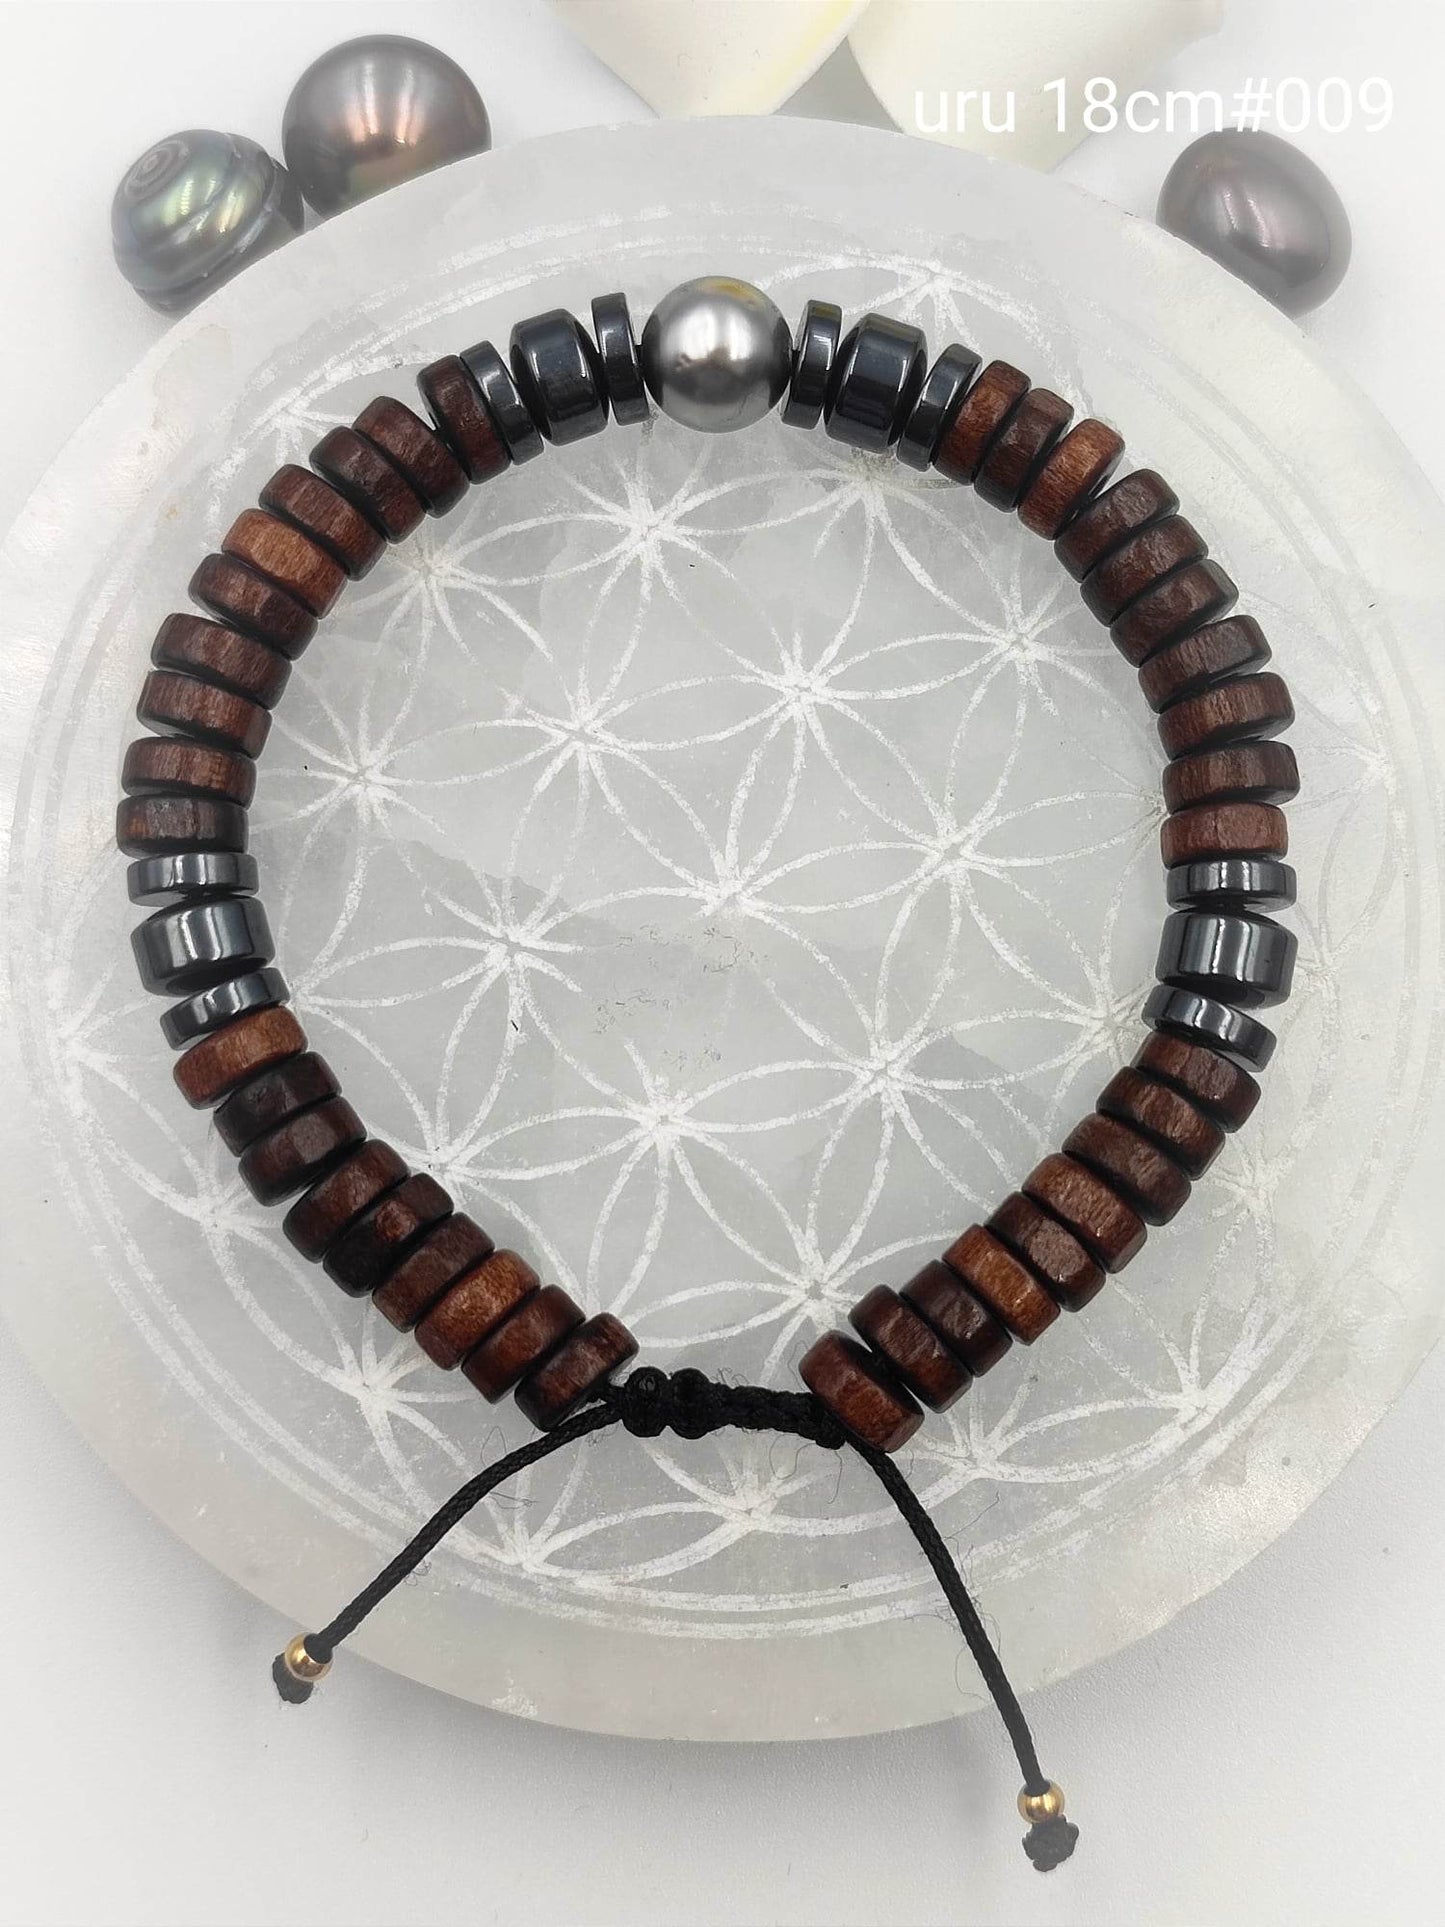 Bracelet homme "'Uru" Perle de Tahiti 18cm #009